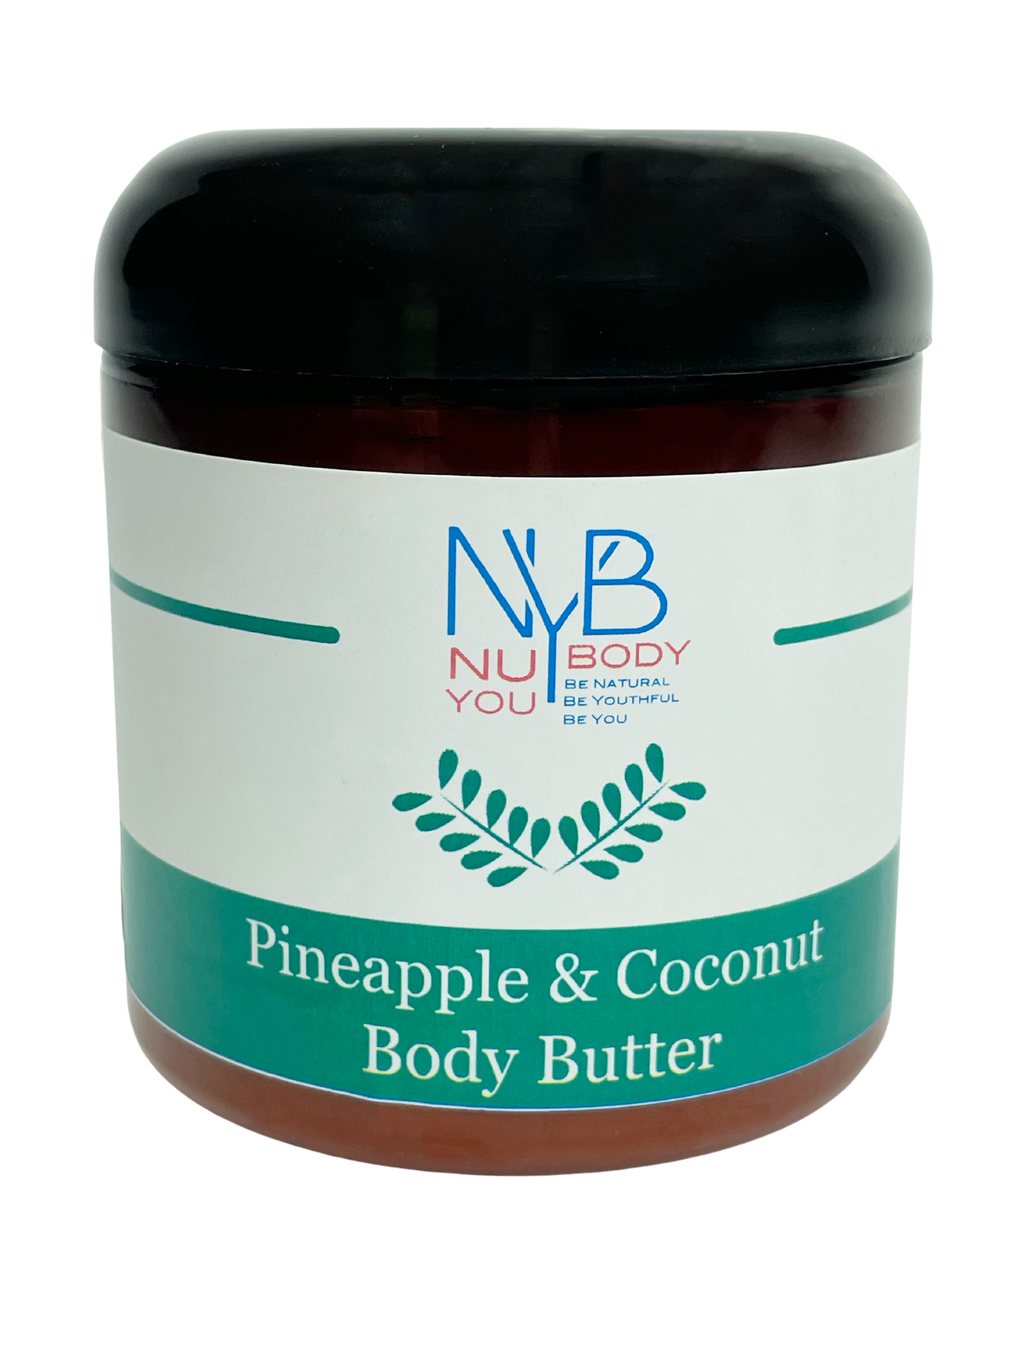 Pineapple & Coconut Body Butter